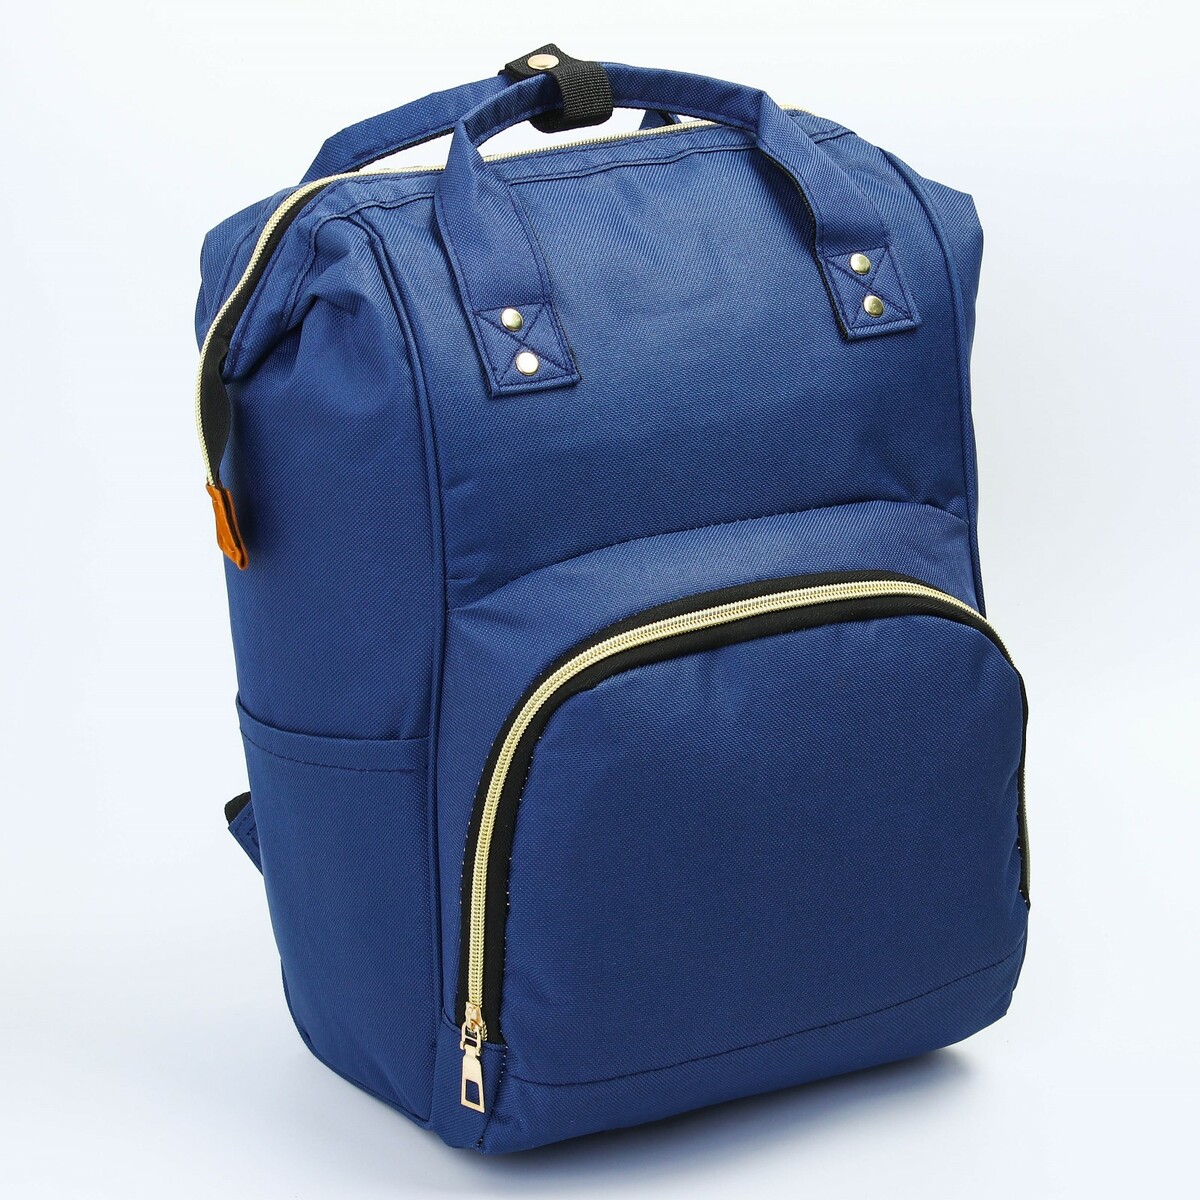 Рюкзак женский с термокарманом, термосумка - портфель, цвет синий рюкзак женский с термокарманом термосумка портфель серый синий